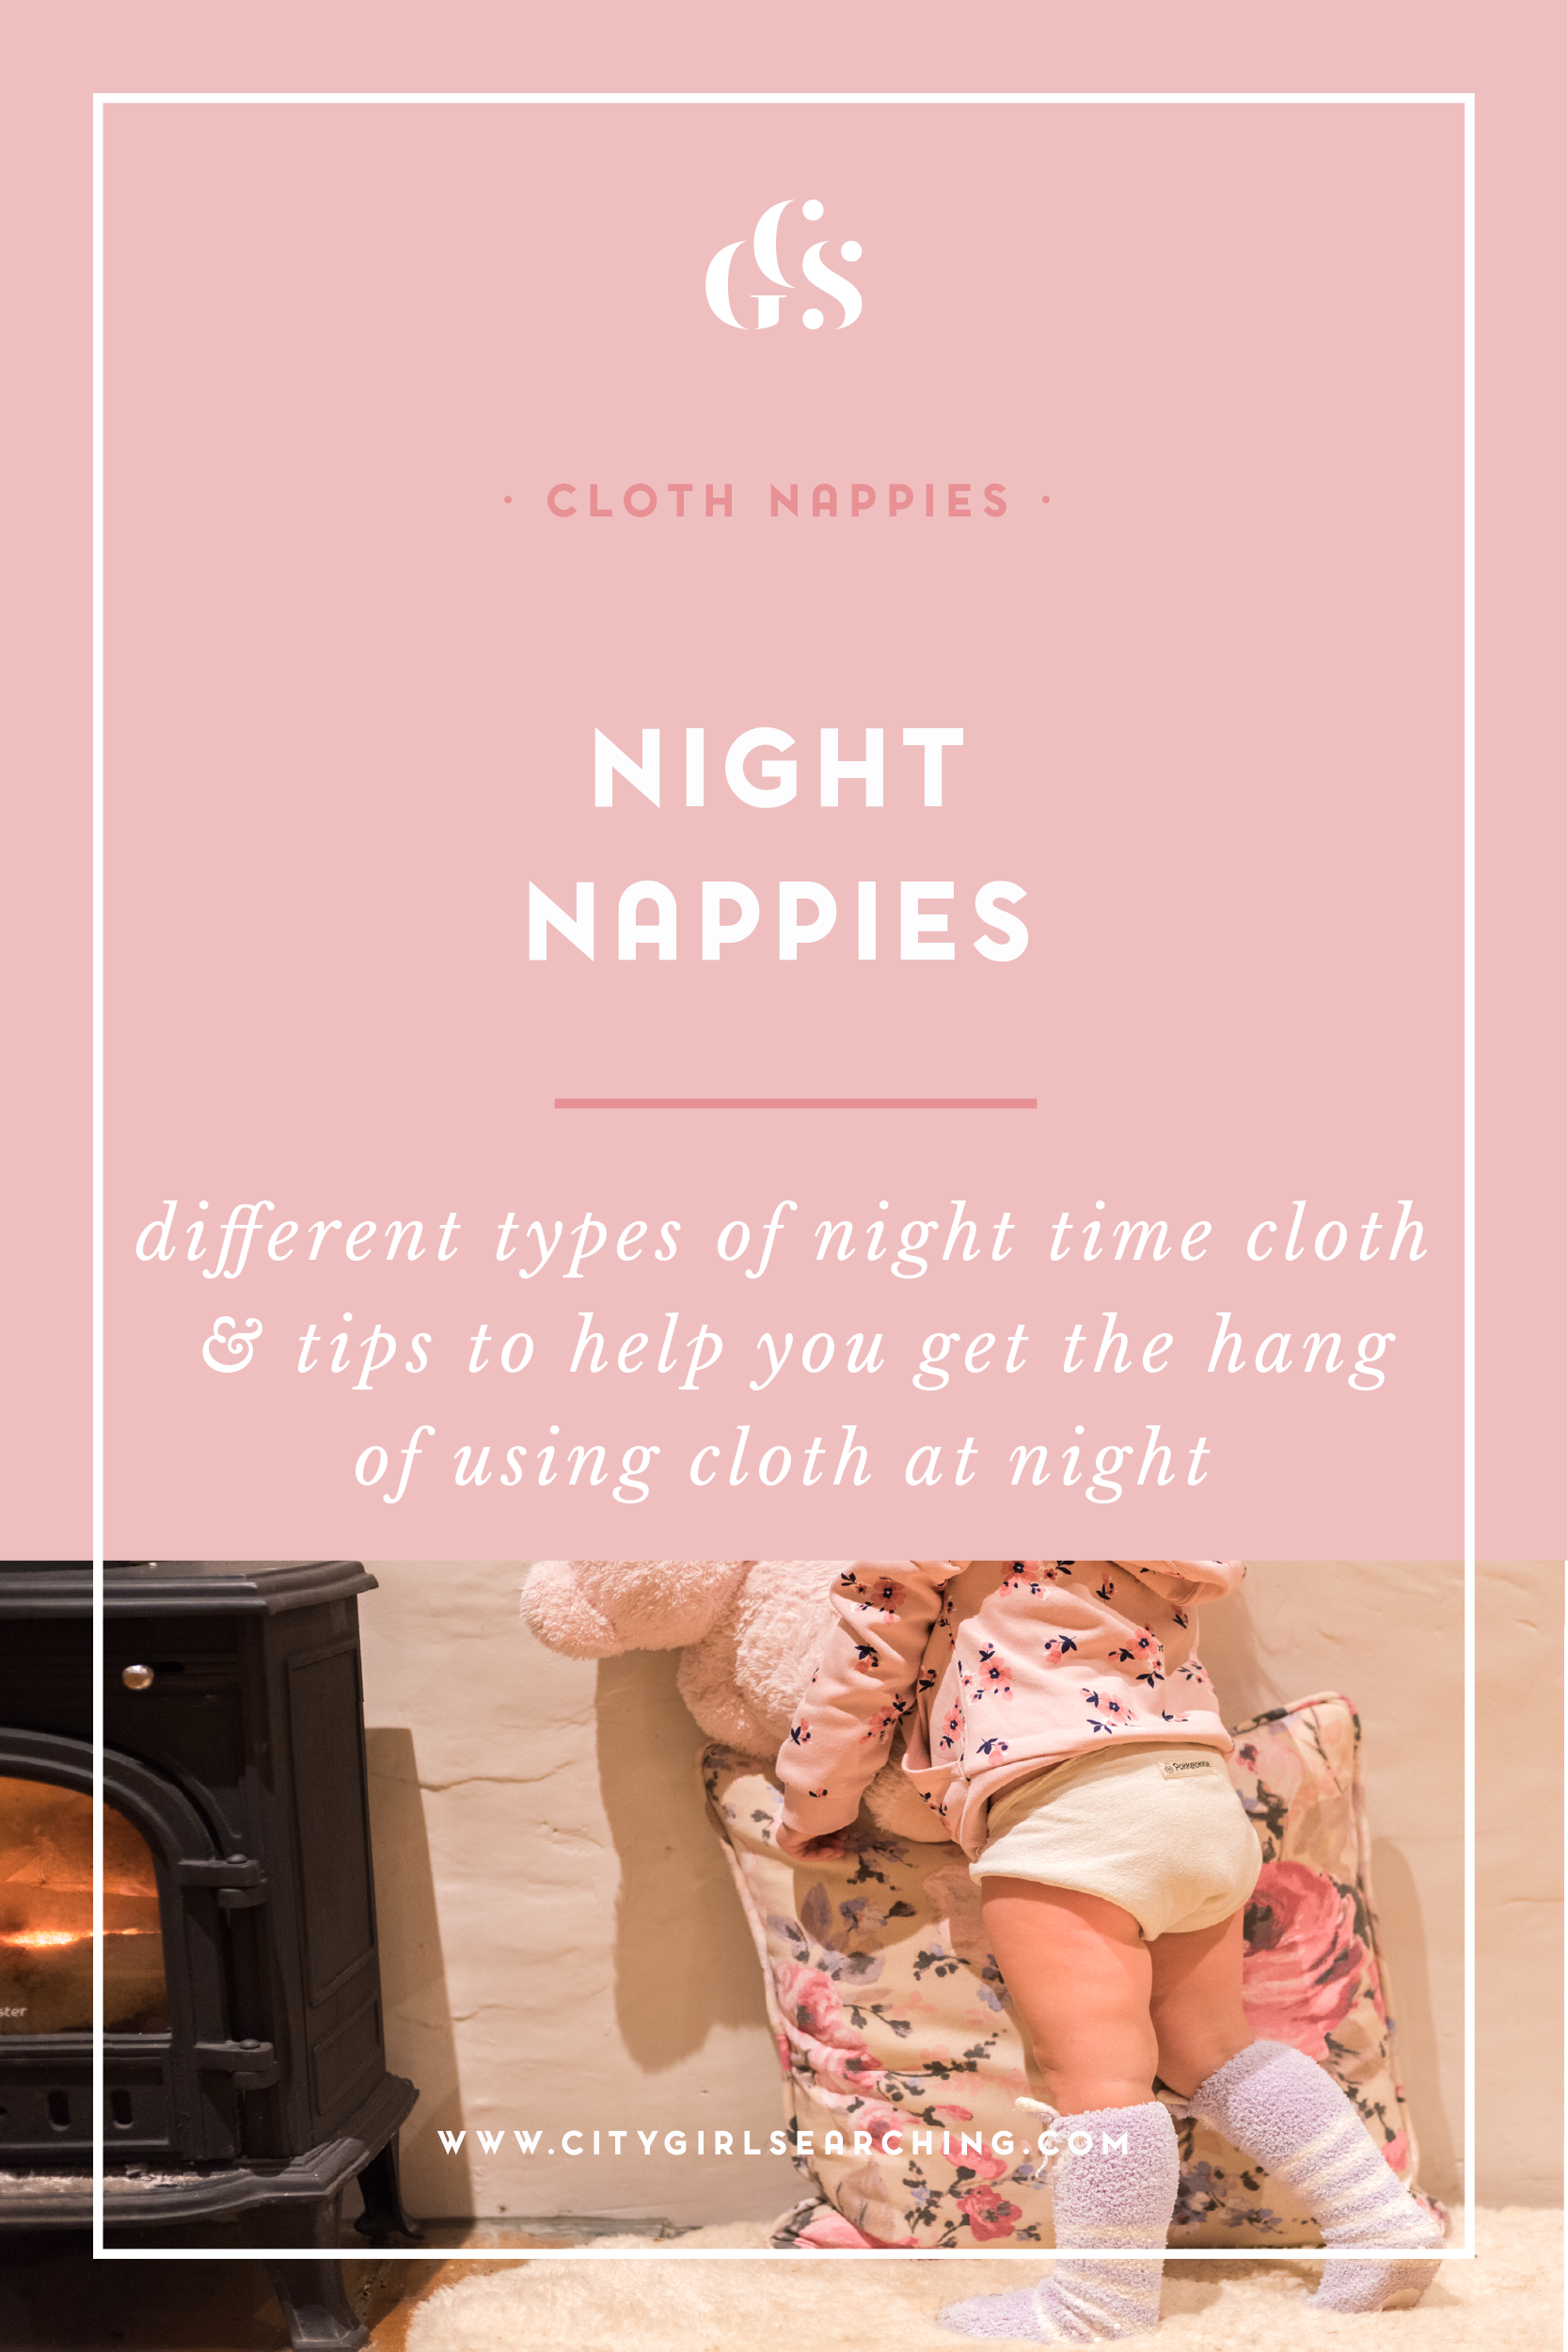 https://images.squarespace-cdn.com/content/v1/524e2612e4b093015db6d293/1587387180169-R4KJCBGQ9KXQRX67LLWT/Night+Nappies+How+to+use+cloth+at+night+tips+to+help+you+use+nighttime+cloth+nappy-01-01.png